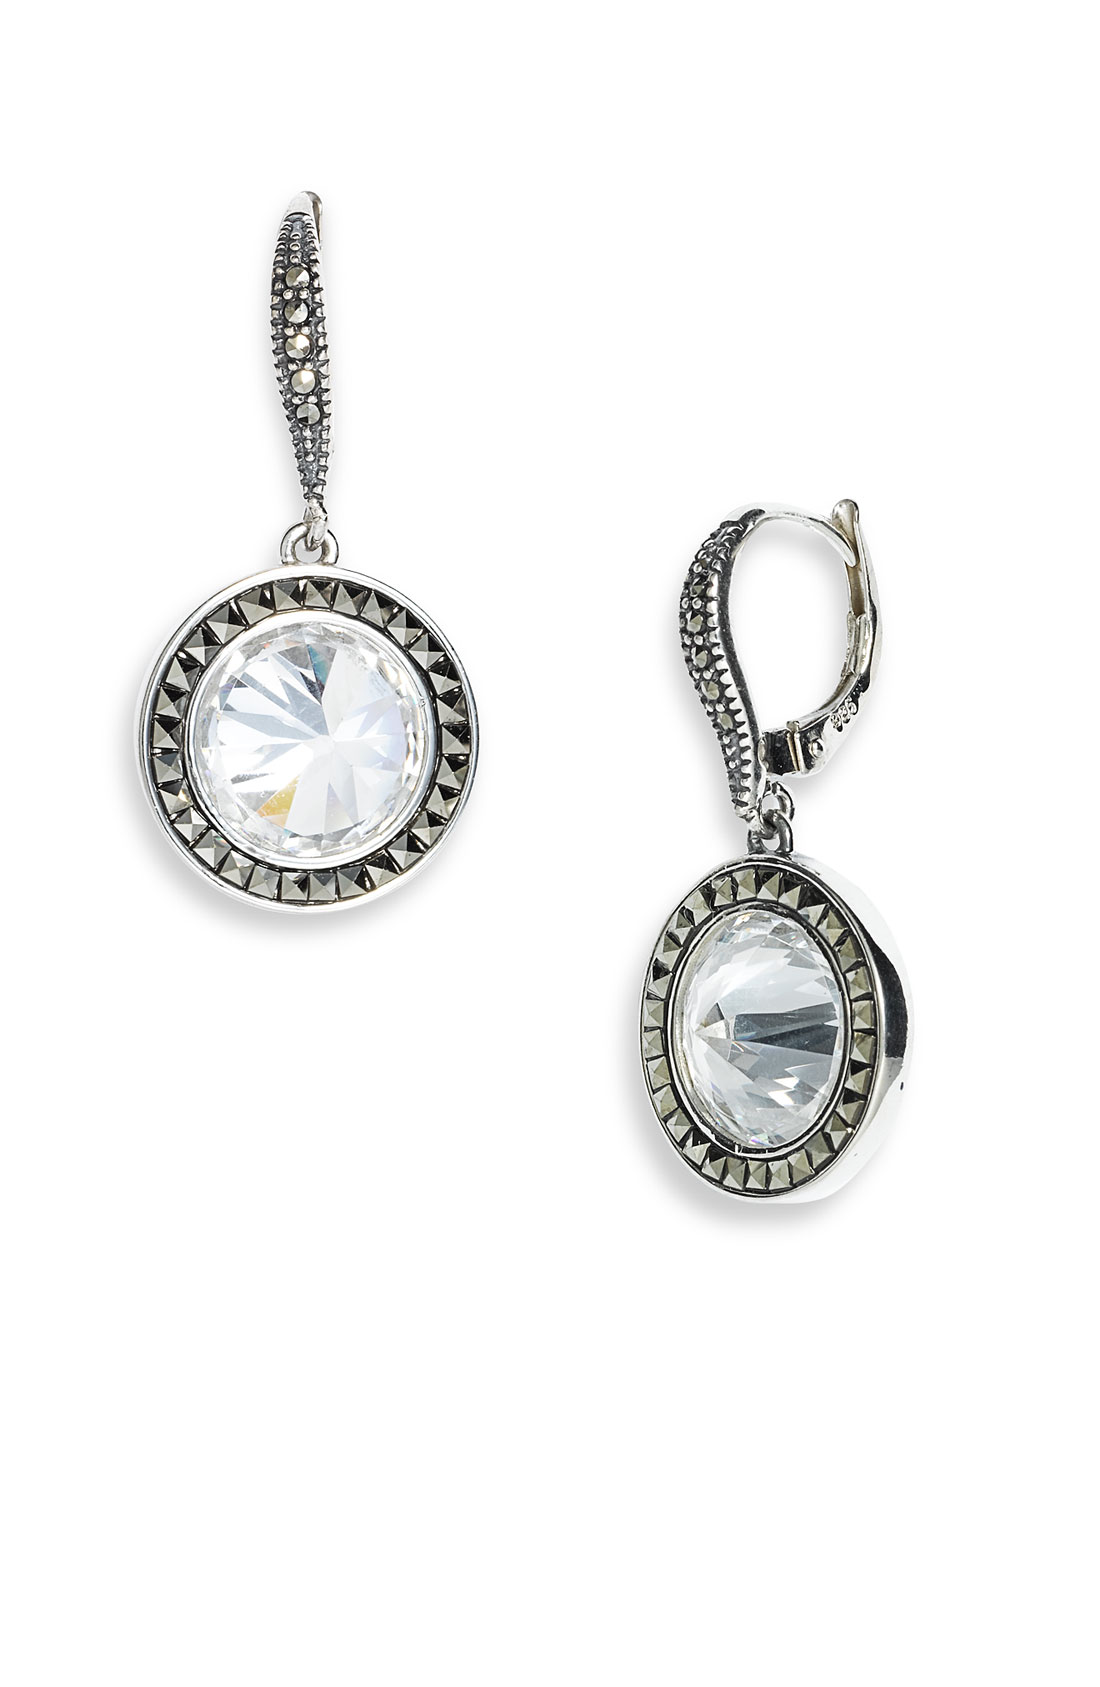 Judith Jack Perfect Match Drop Earrings in Silver (sterling silver